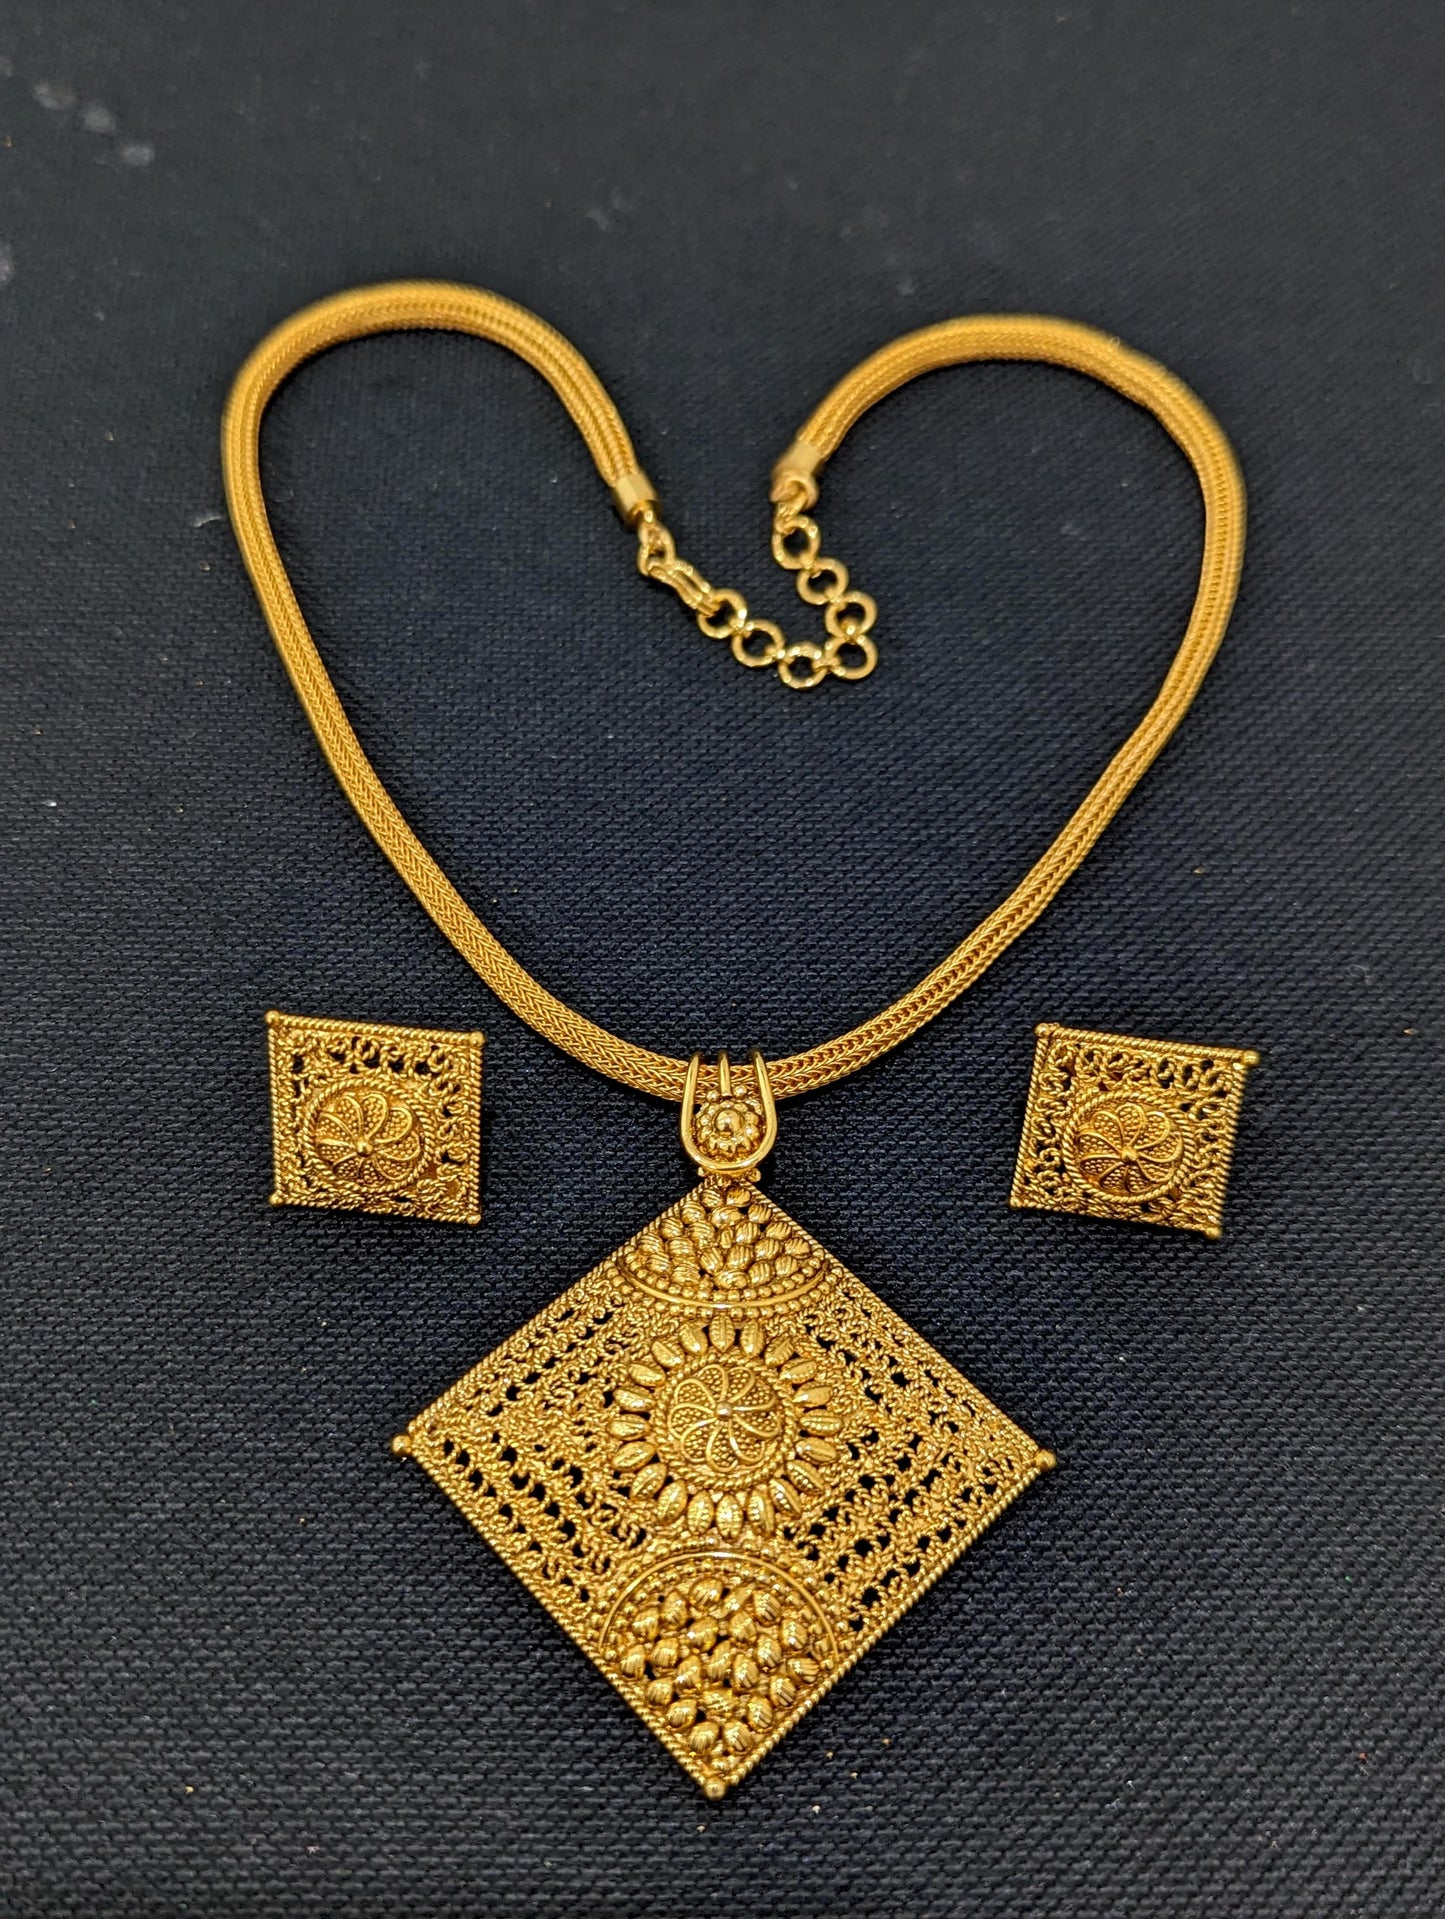 Gold look alike Pendant and Earrings Set - Design 1